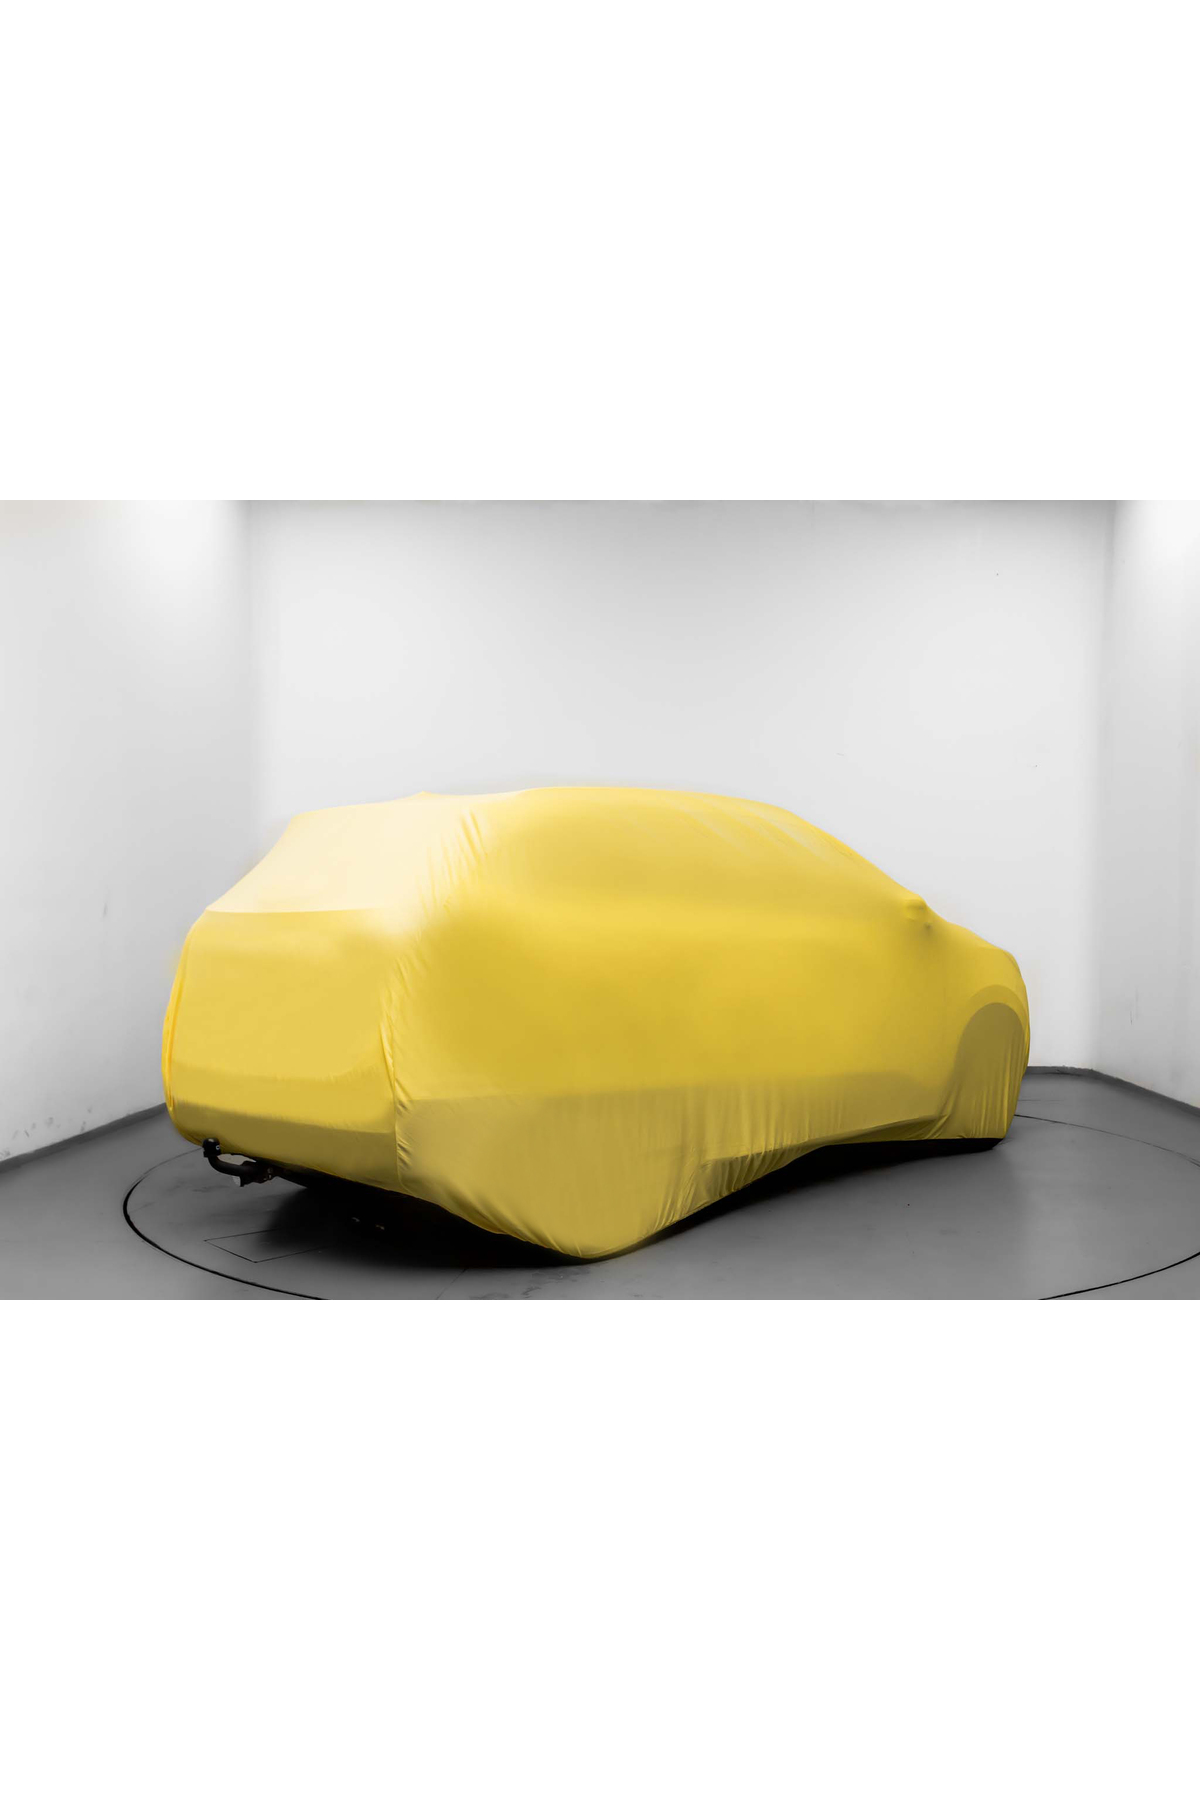 Teksin OPEL MOKKA X (2016-2019) Auto Canvas with Fabric Logo